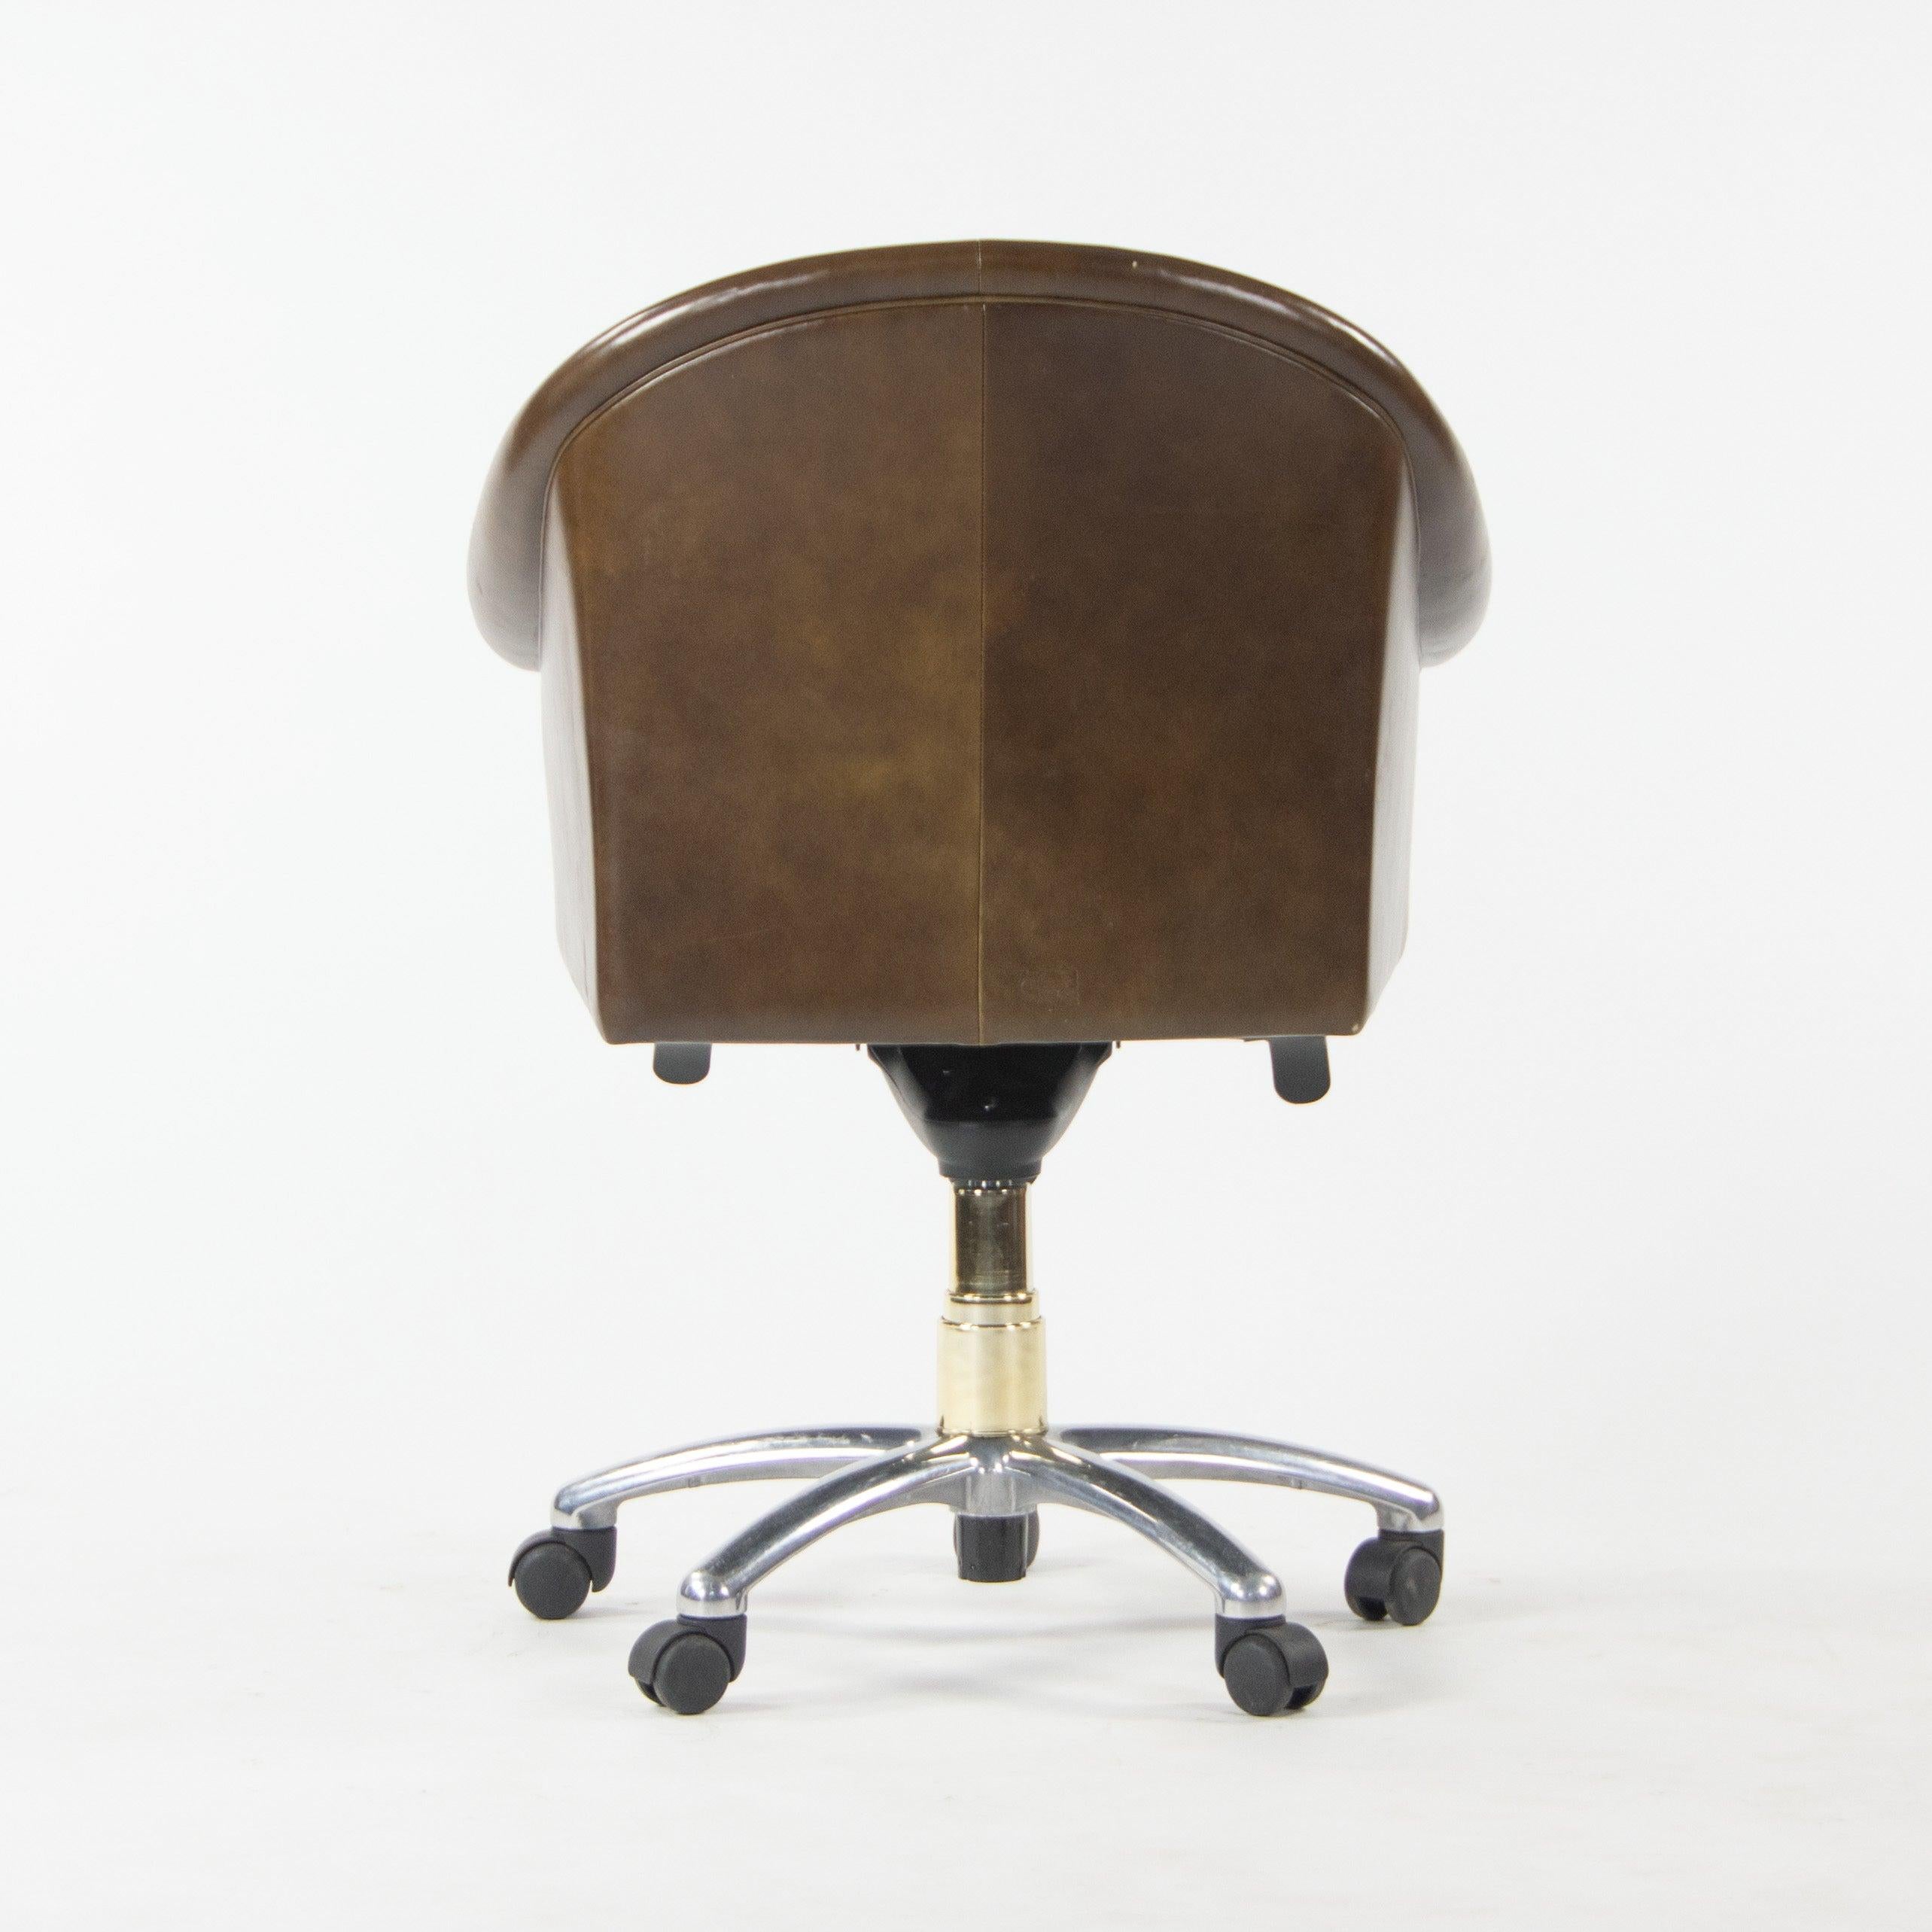 Italian Poltrona Frau Brown Leather Luca Scacchetti Sinan Office Desk Chair For Sale